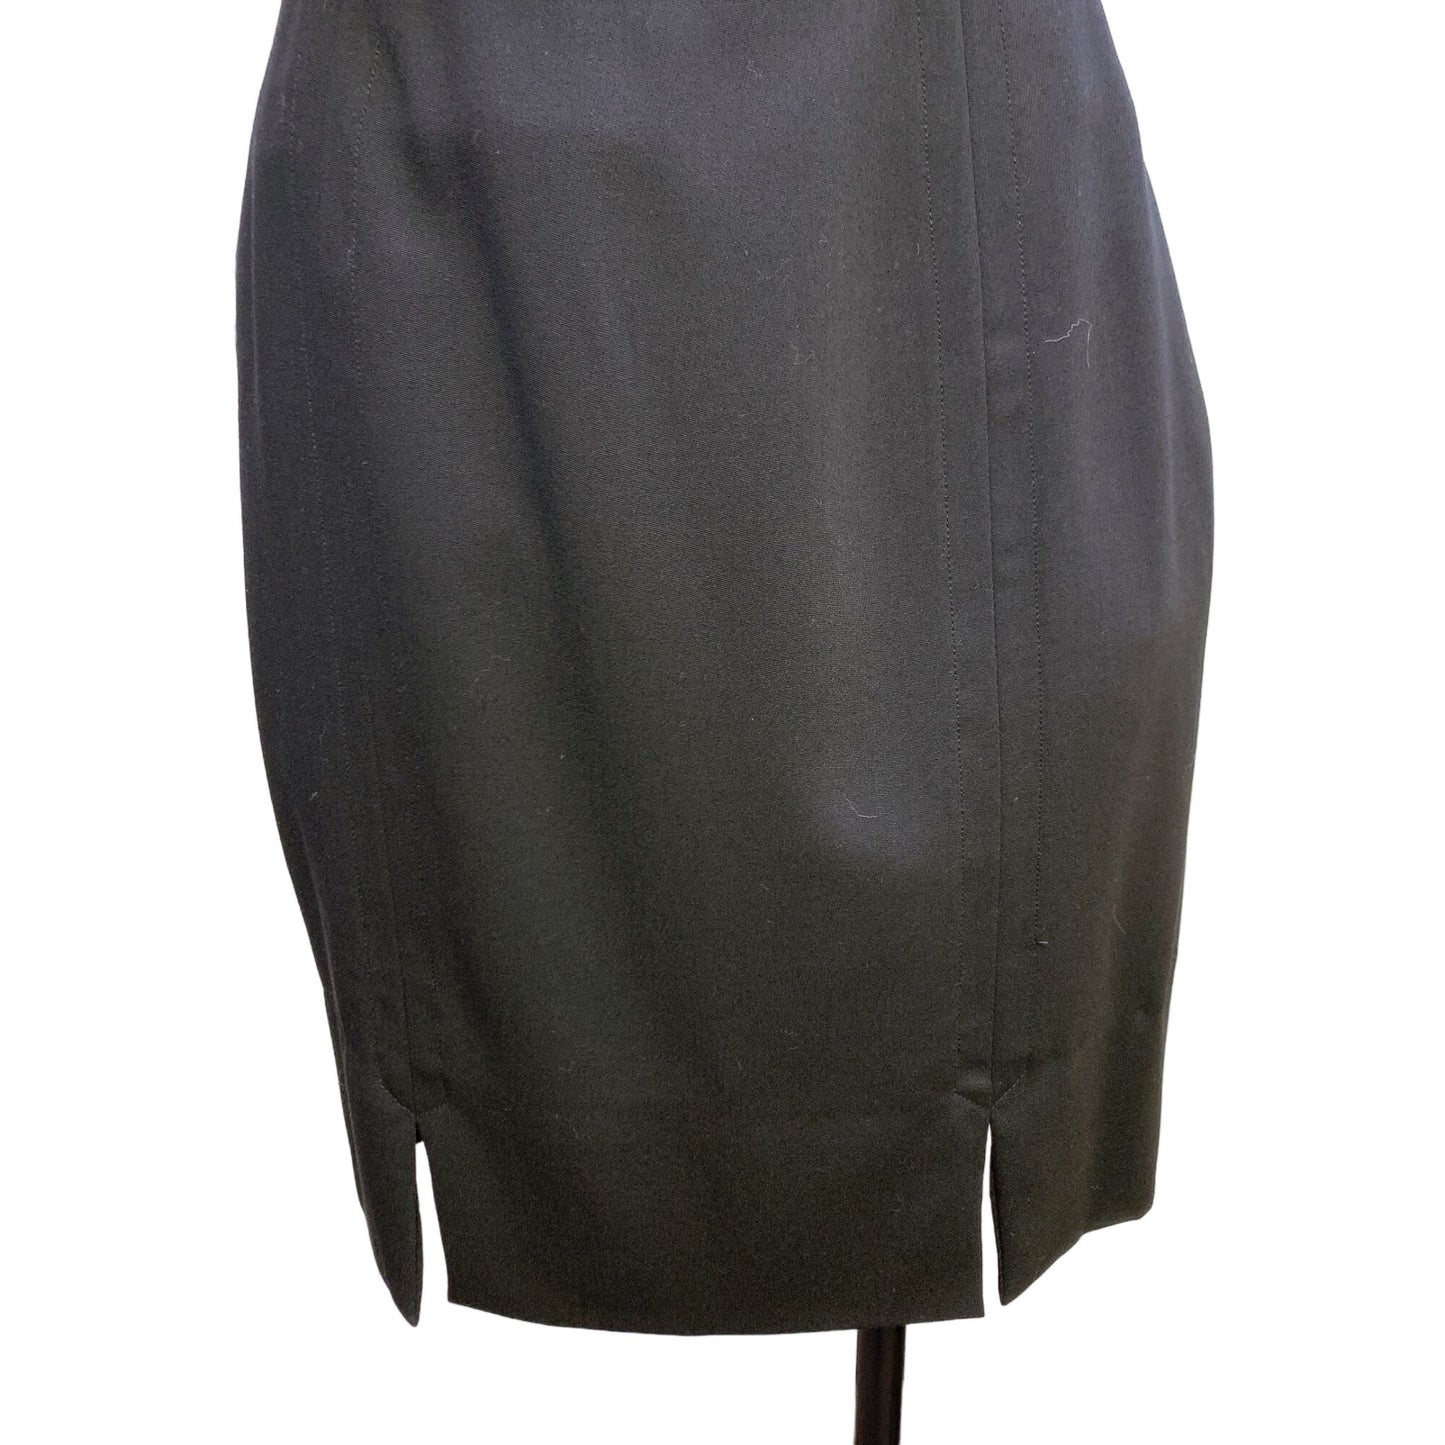 Escada Black Wool Pencil Skirt Size Small/38